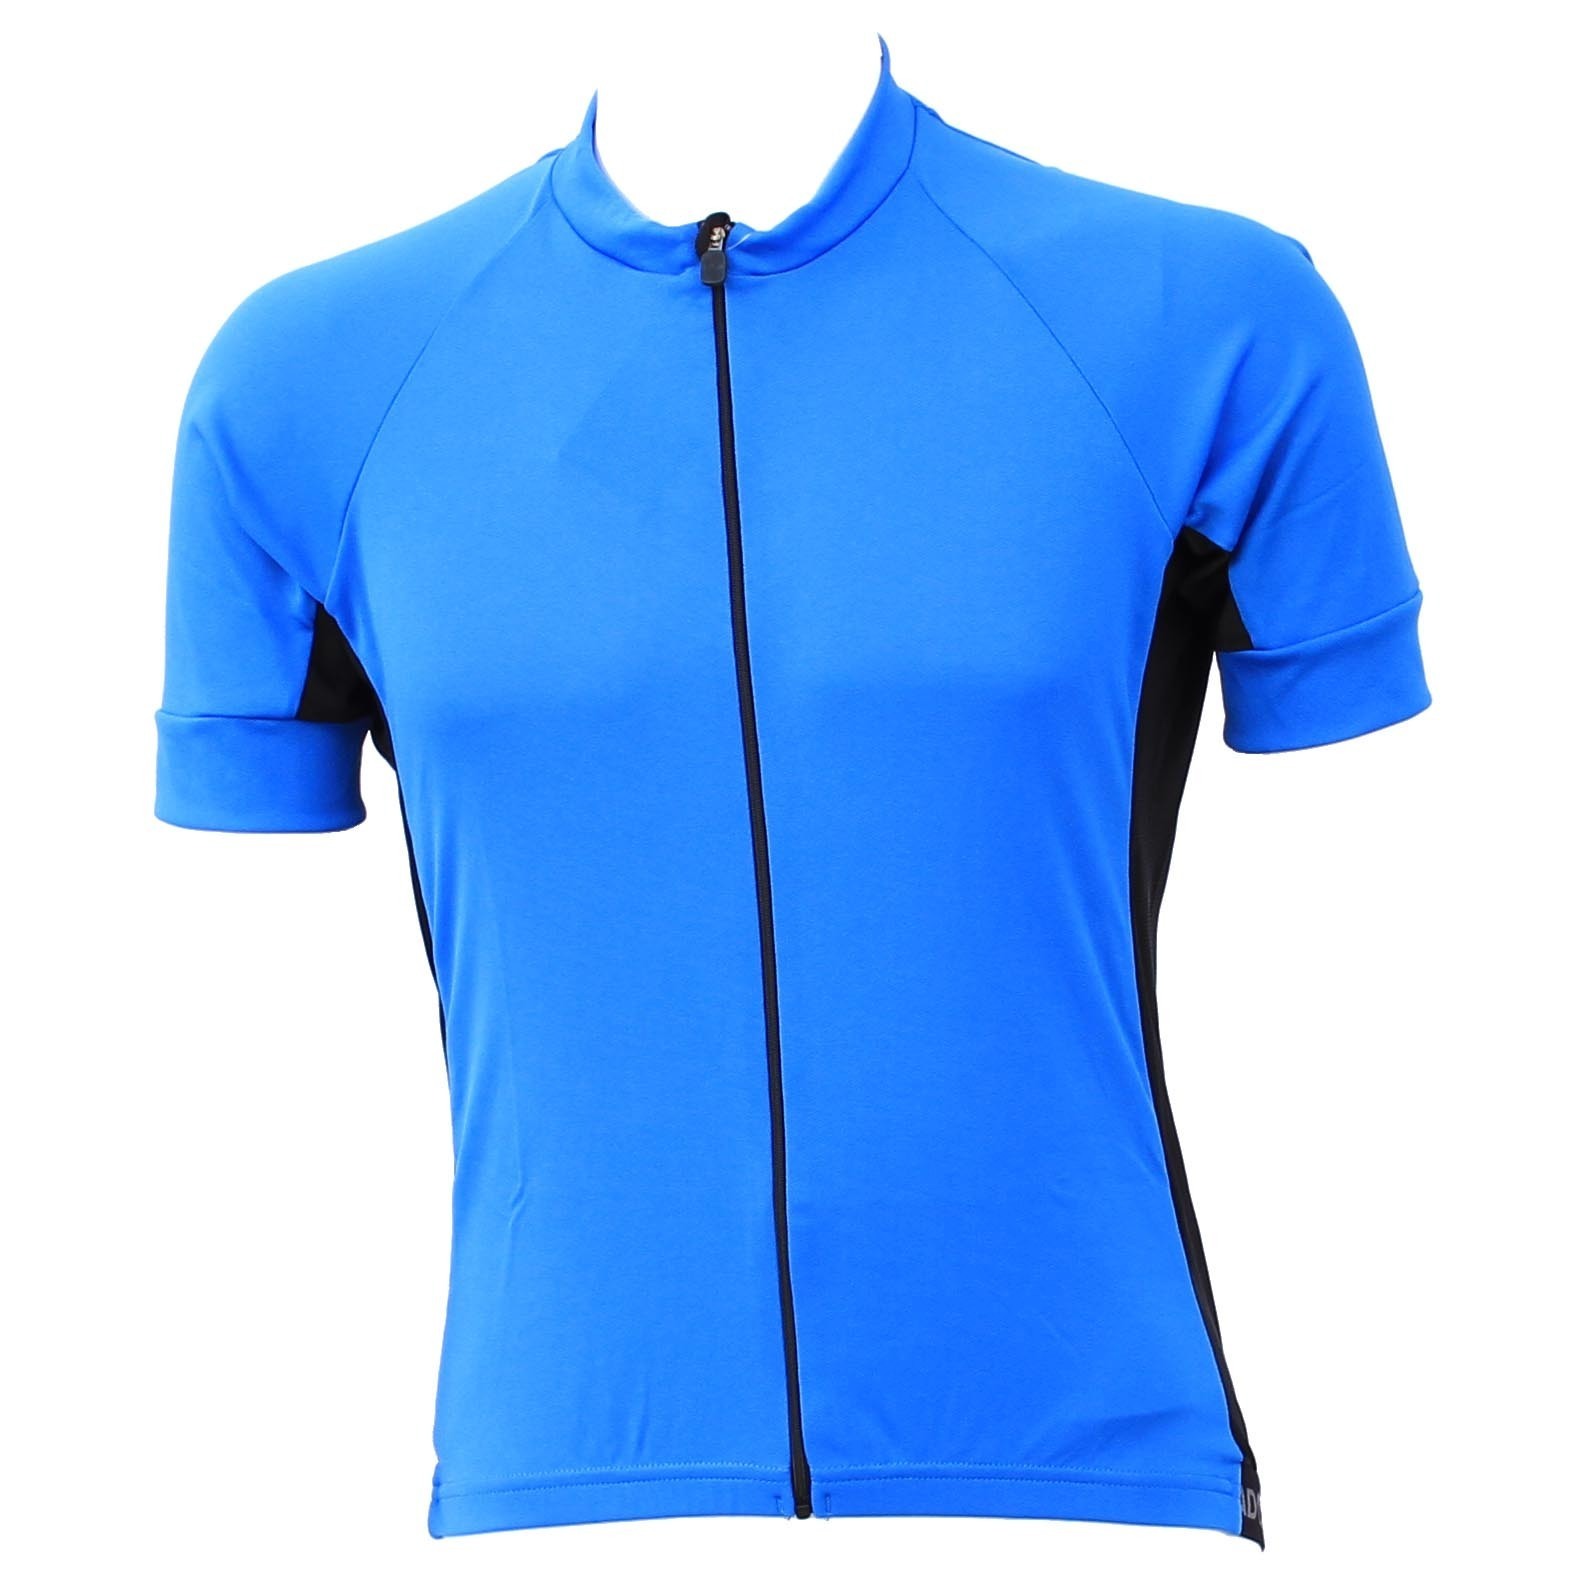 Jackbroad Premium Quality Cycling Short Sleeves Blue M